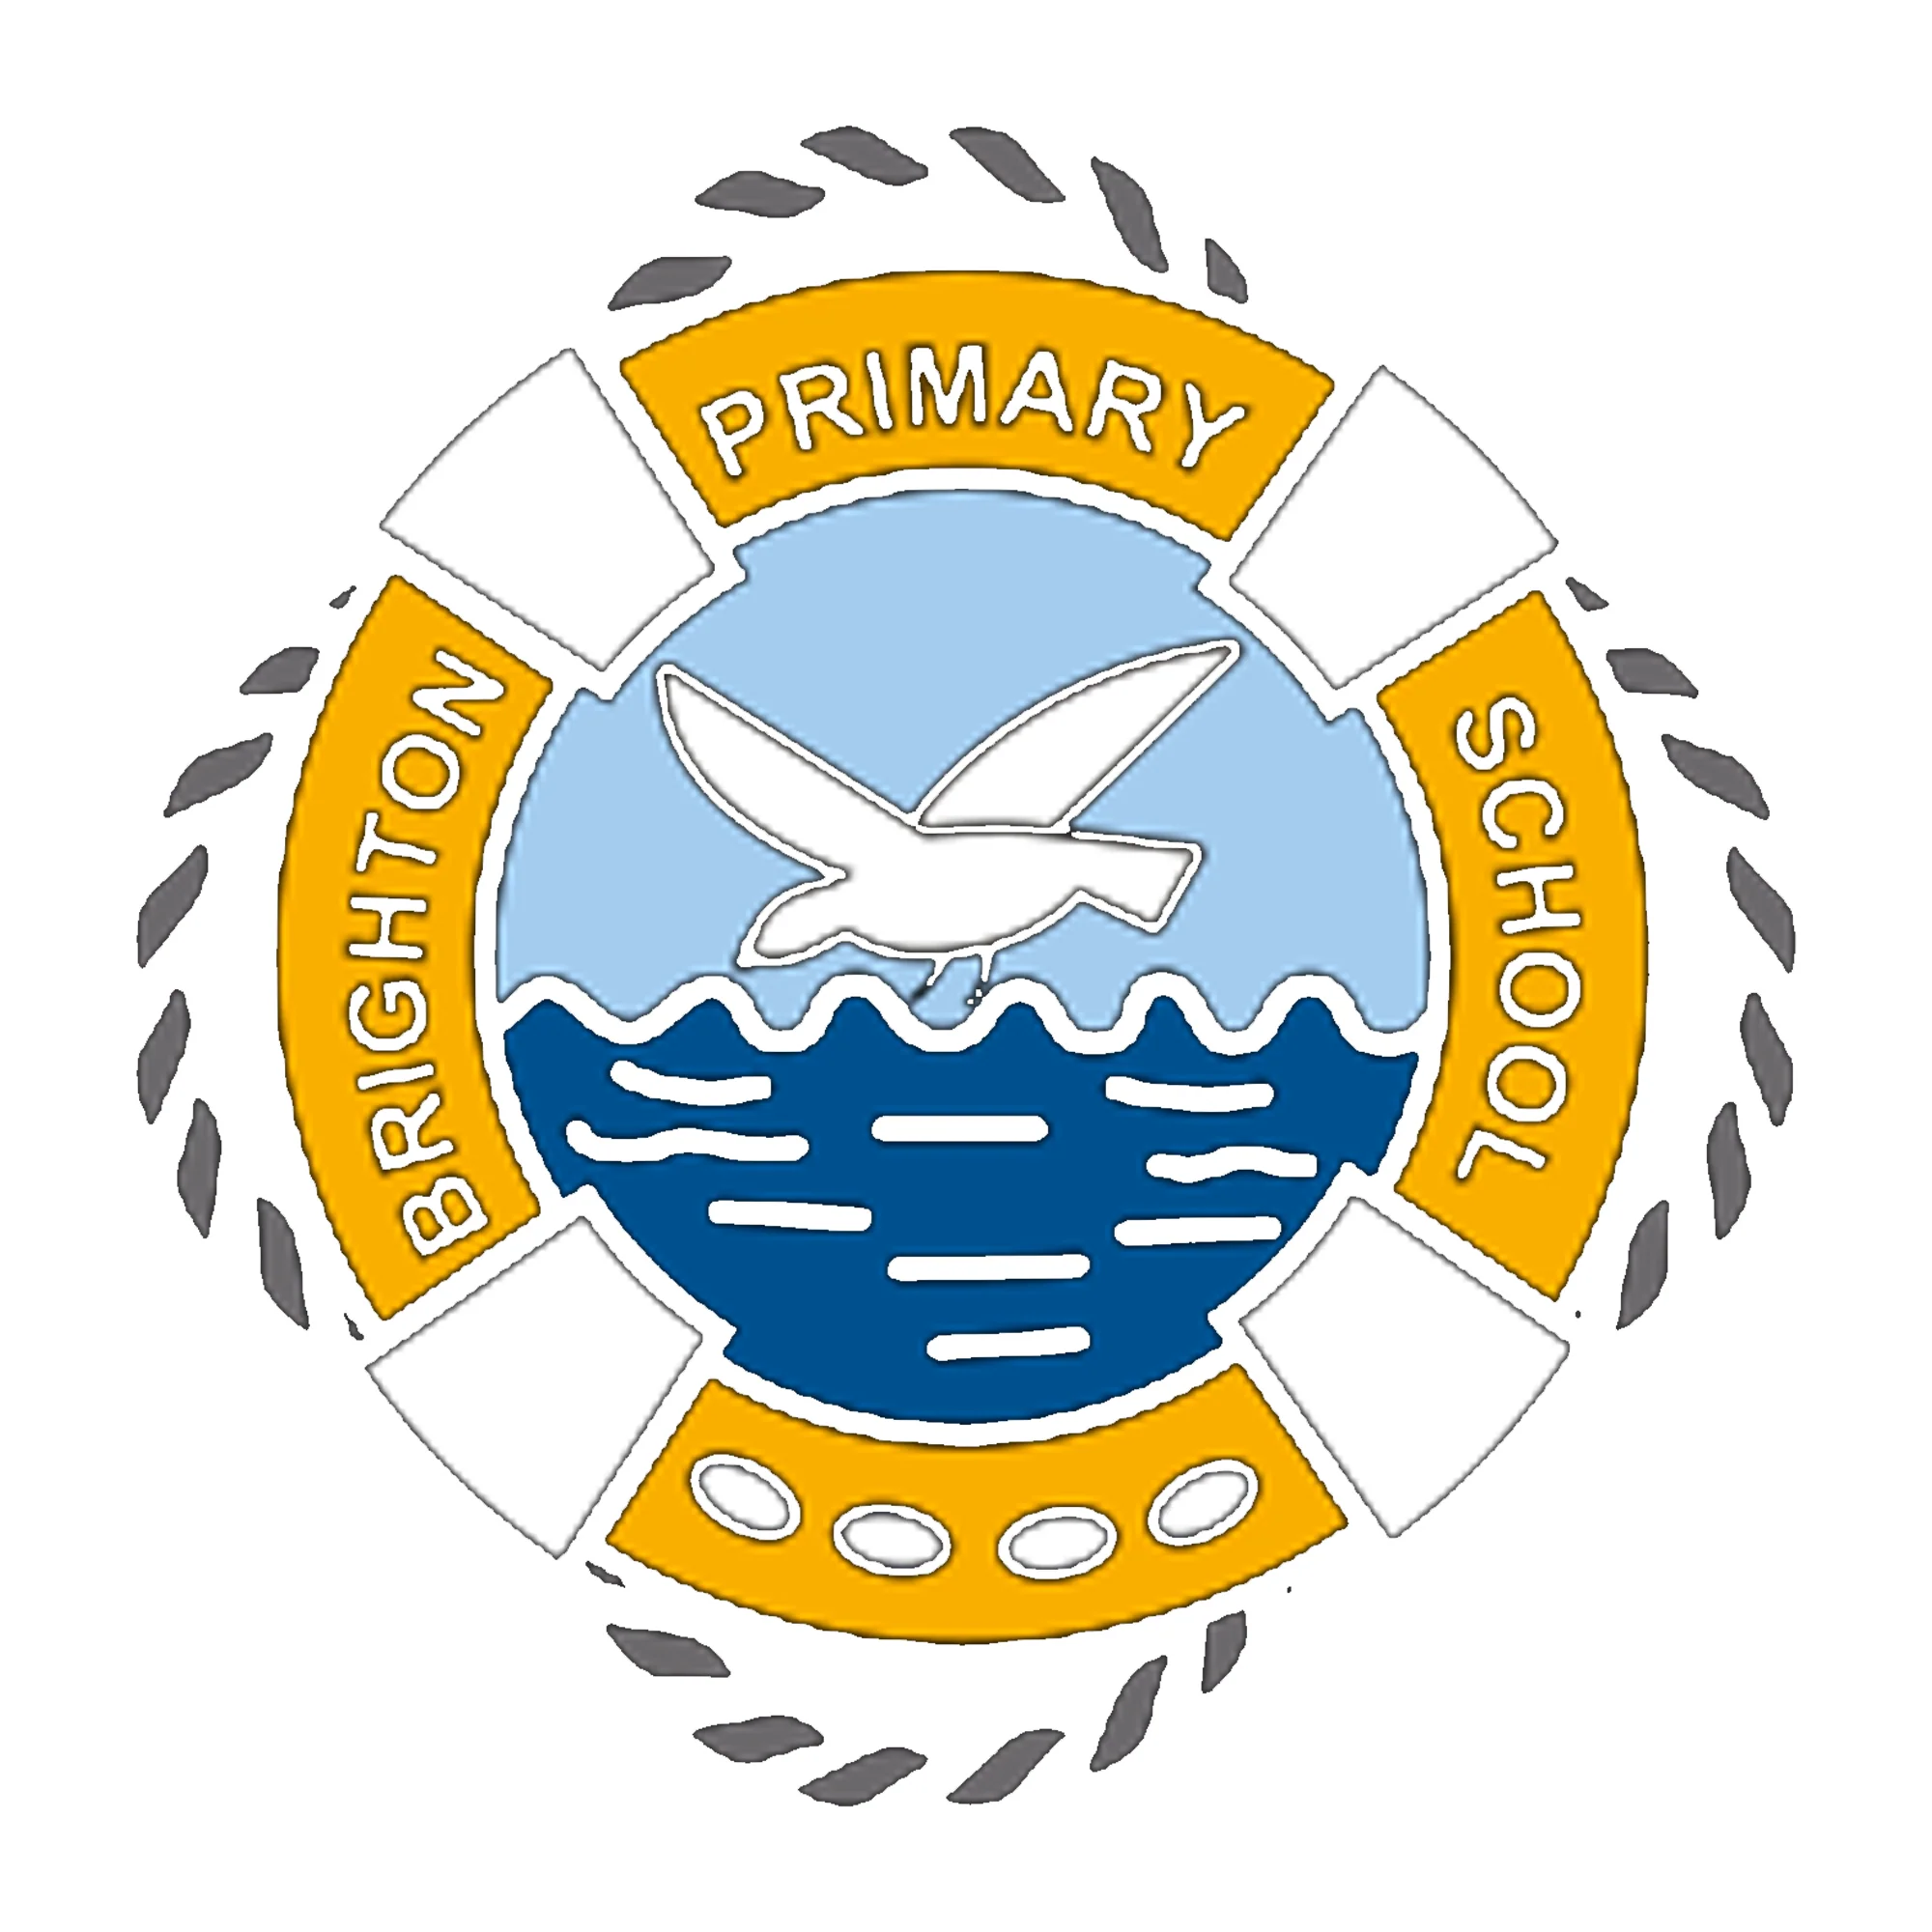 Brighton Primary School - Commemorative